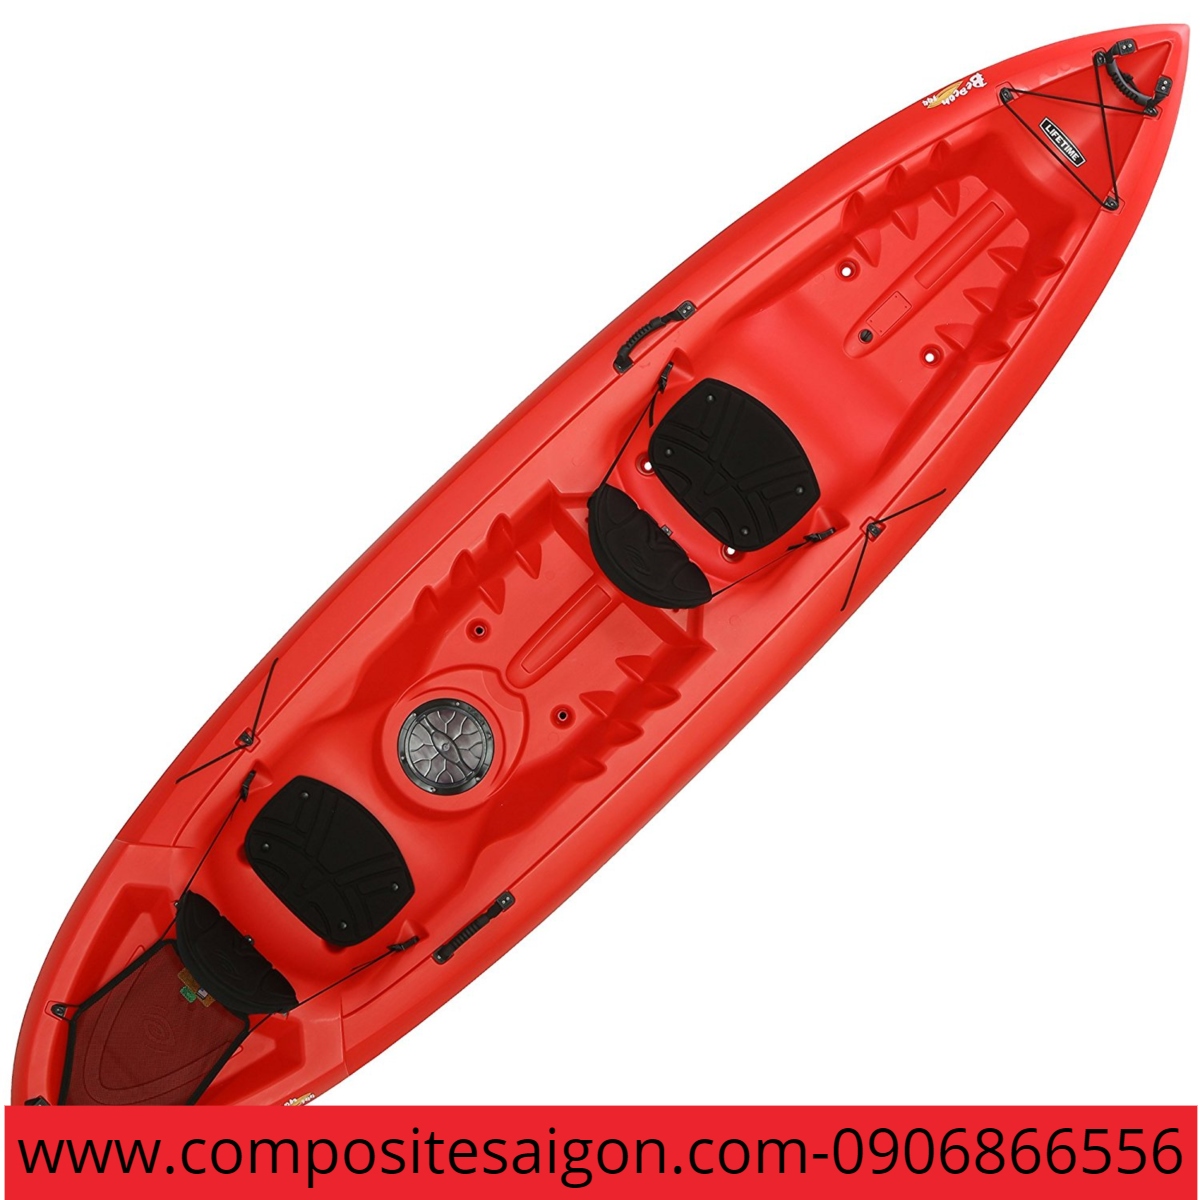 thuyền kayak đôi, thuyền kayak đôi sit-in, thuyền kayak giá rẻ, thuyền kayak đôi nhẹ, thuyền kayak đôi đẹp, thuyền kayak composite